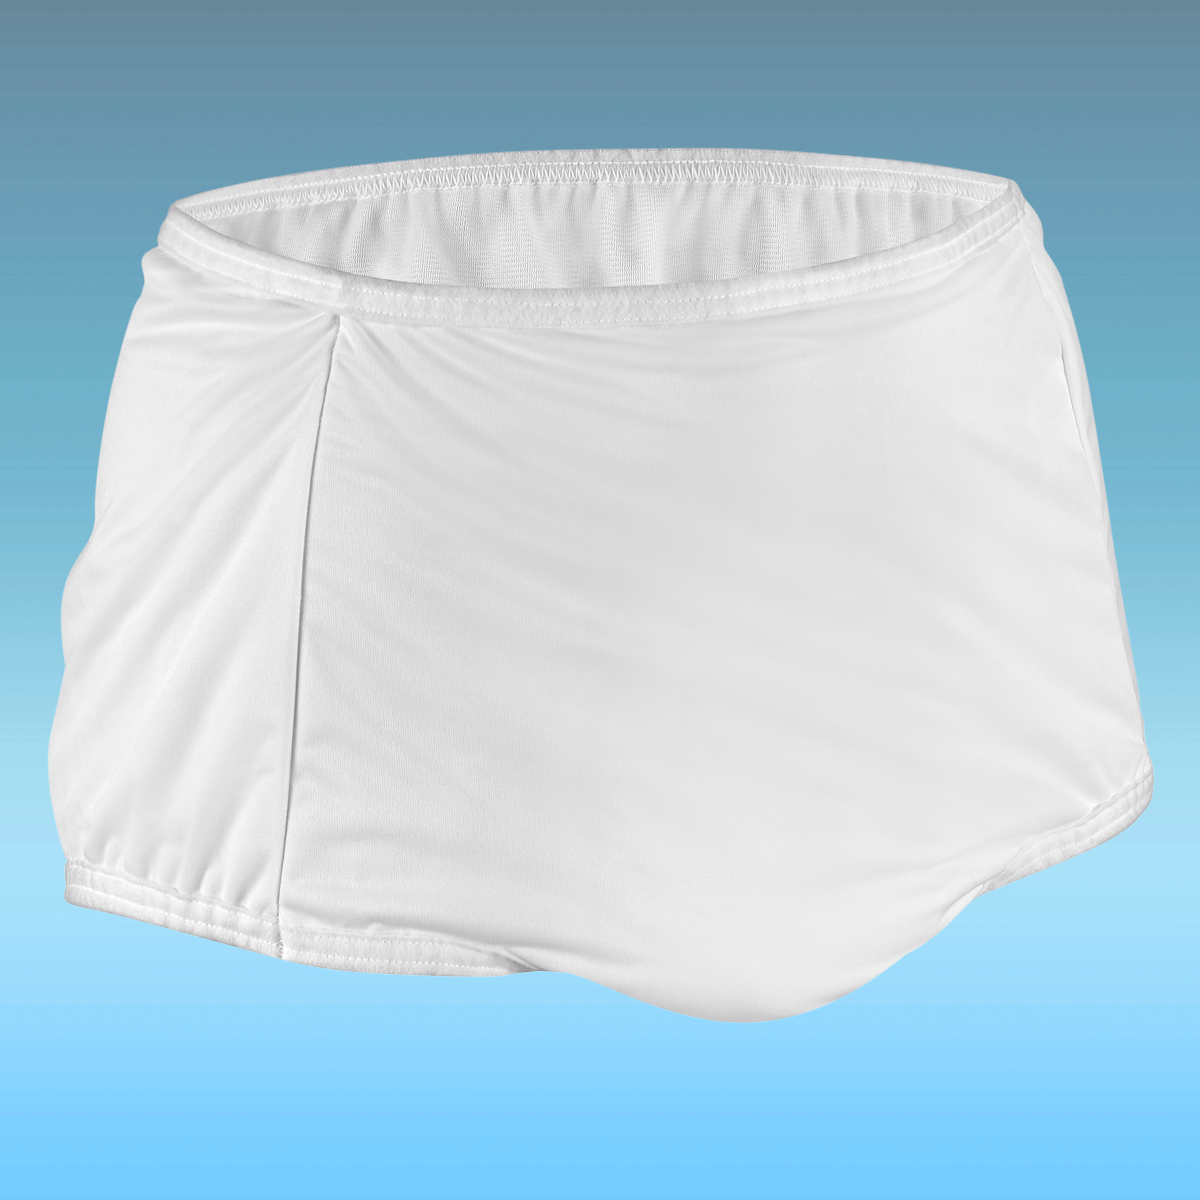  CareFor Men's Incontinence Underwear Briefs, Washable